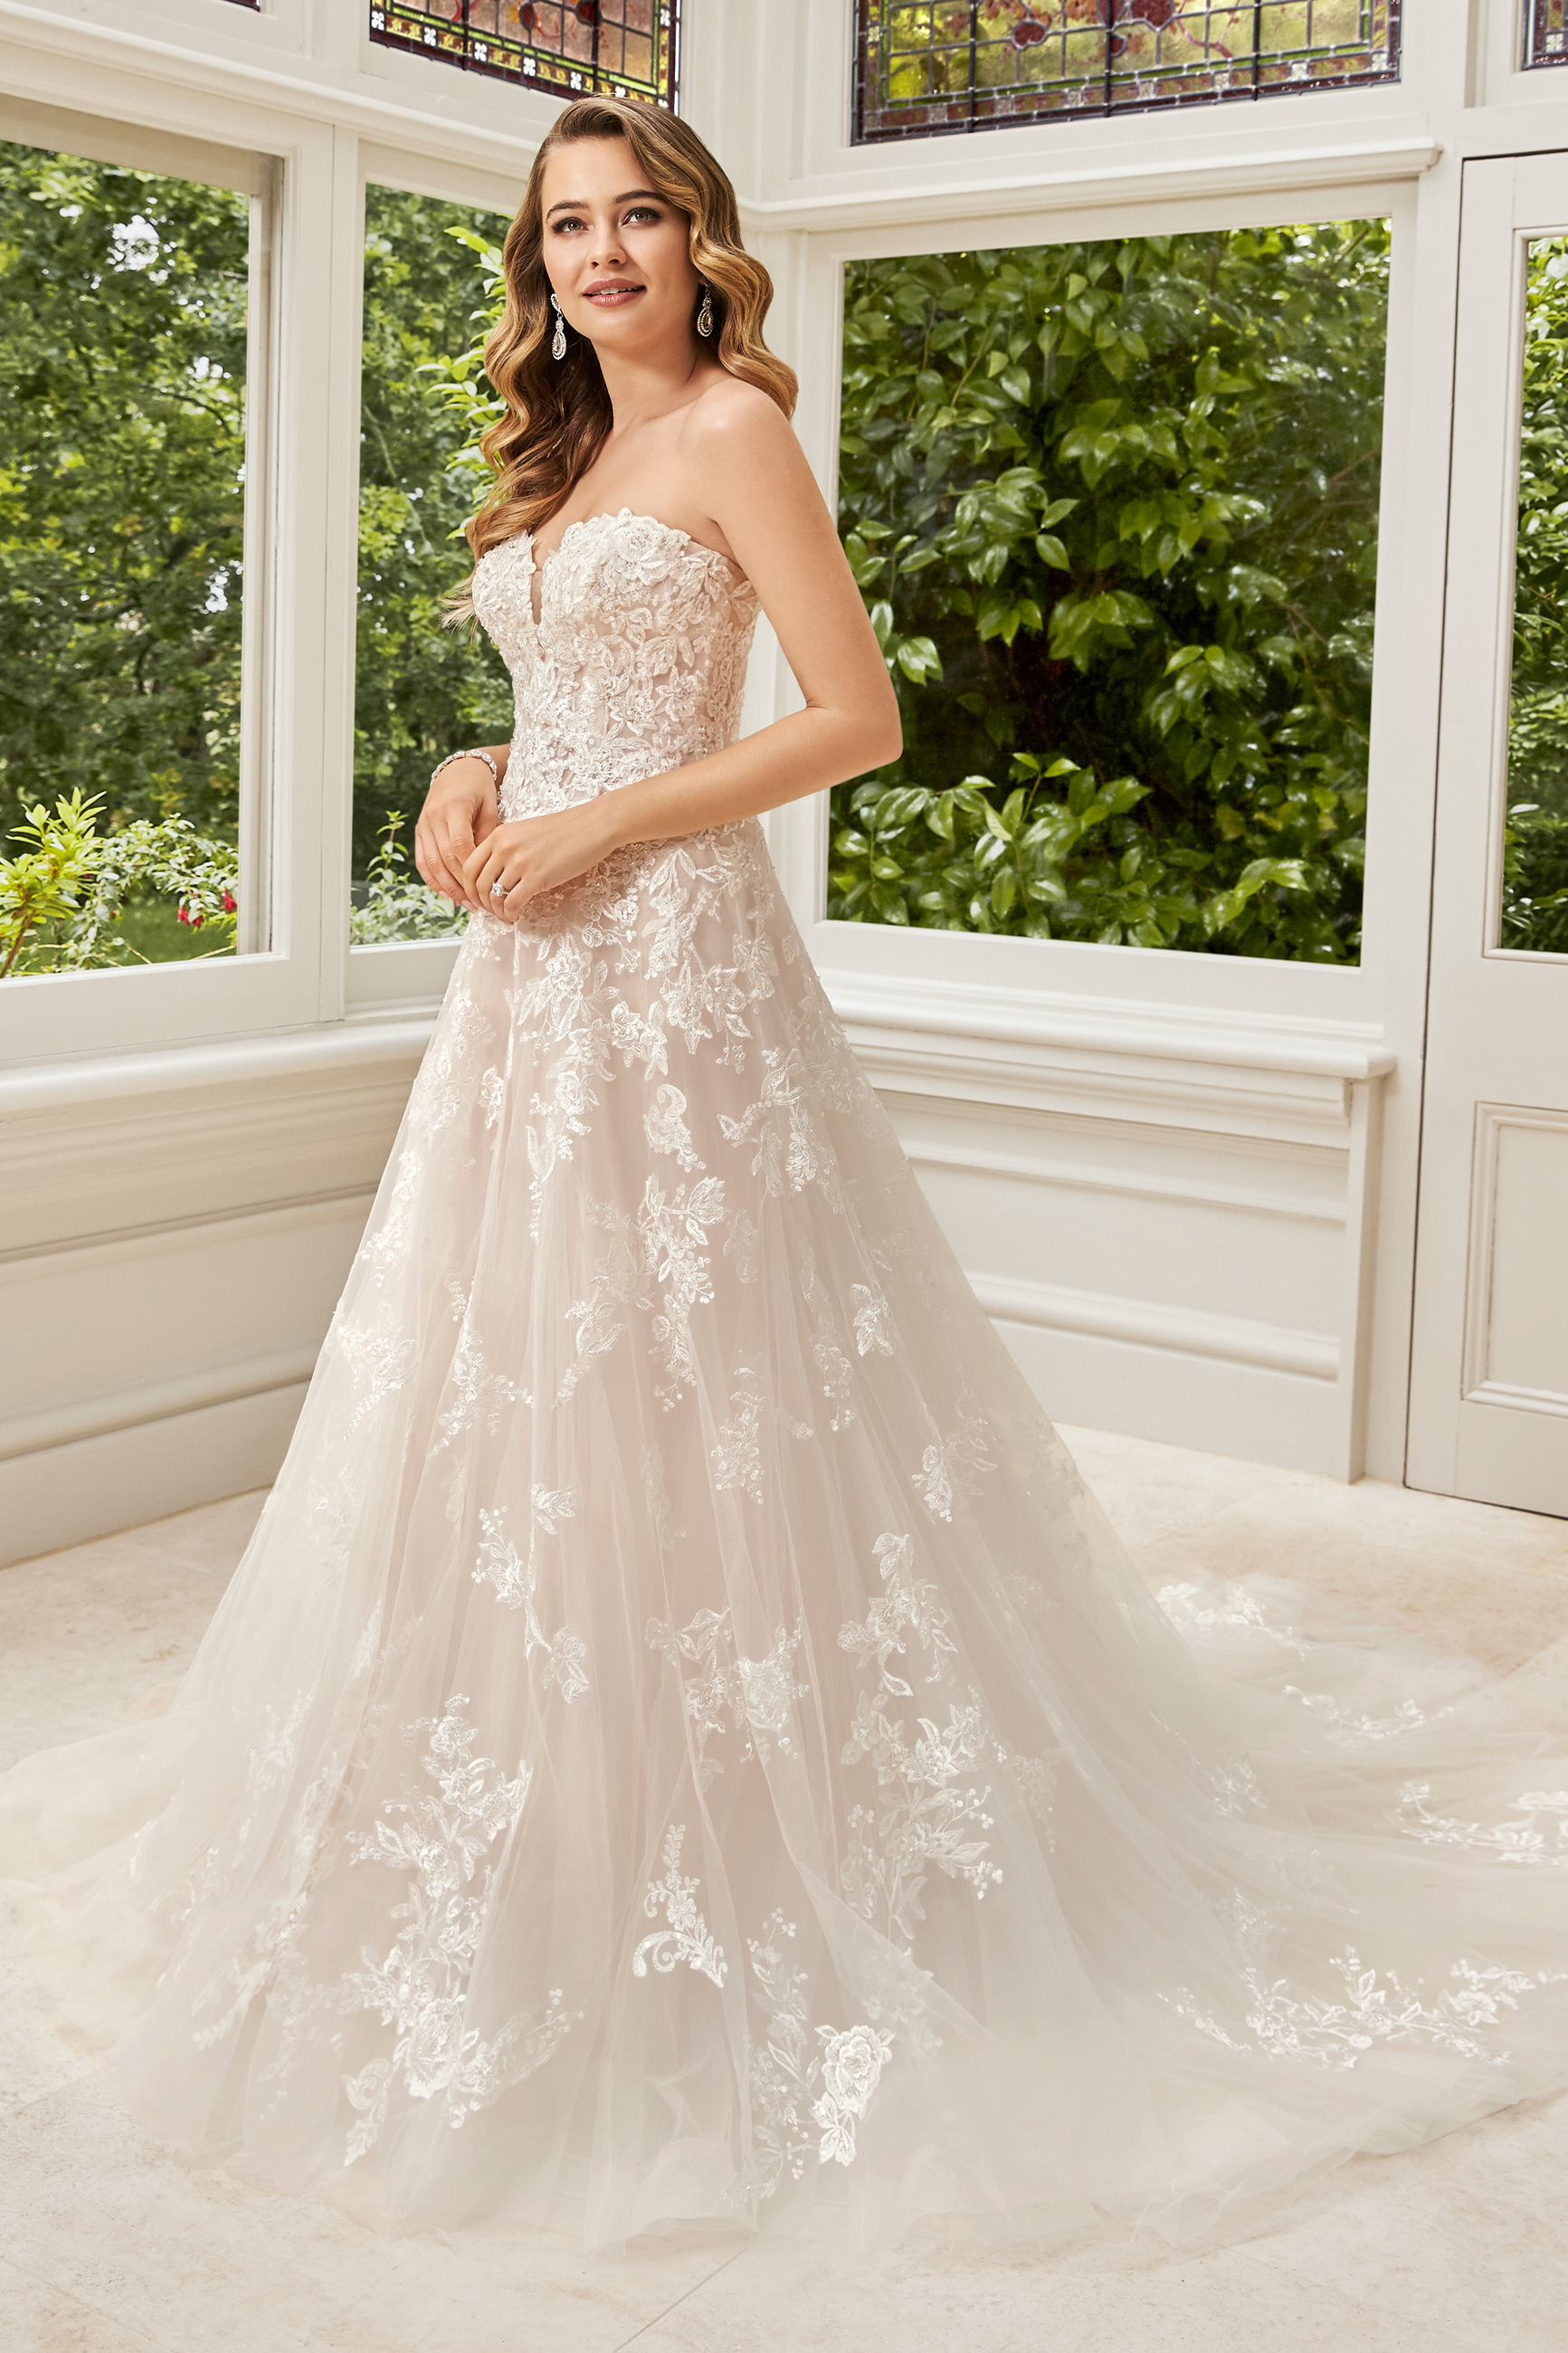 The Enchanting Elegance of a Blush Wedding Dress | VERSAILLES ATELIER